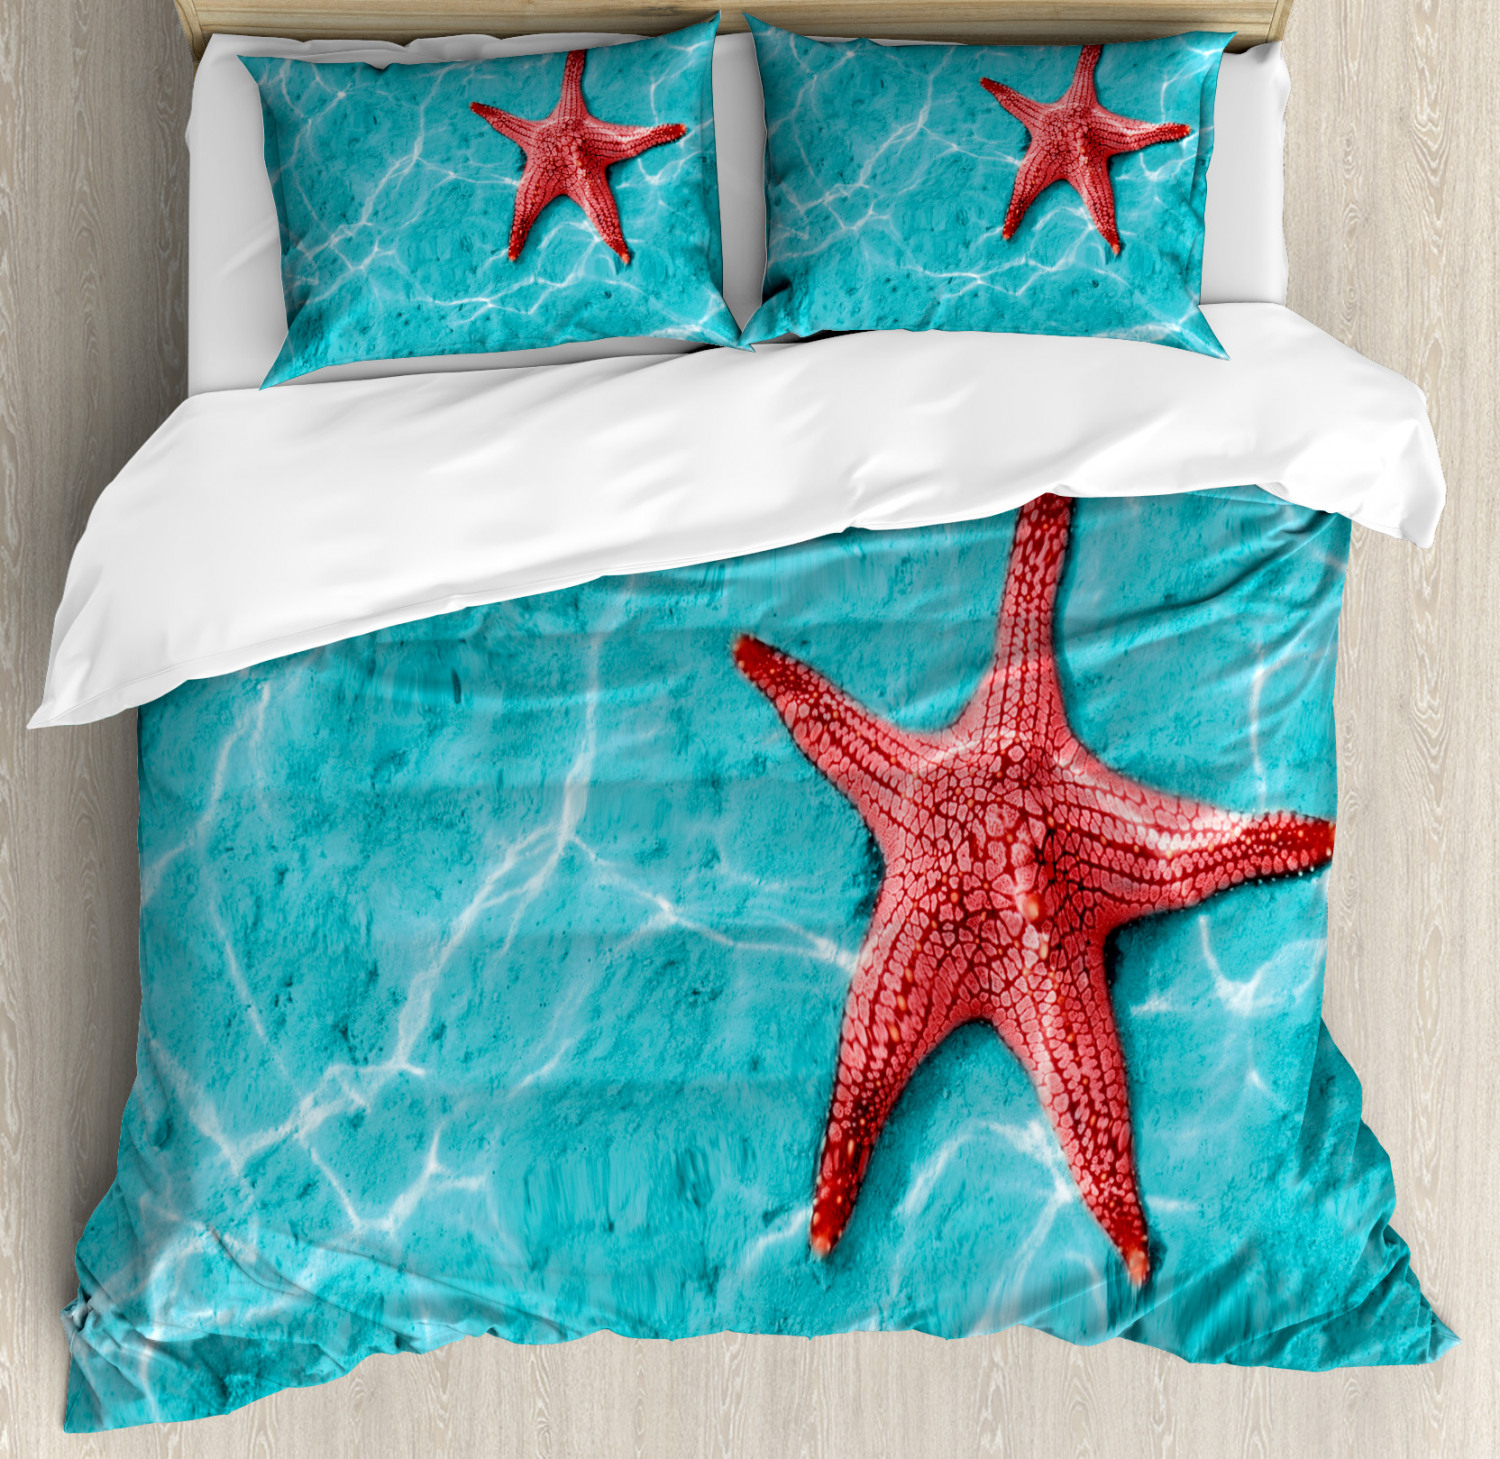 Starfish Duvet Cover Set With Pillow Shams Vivid Blue Water Print